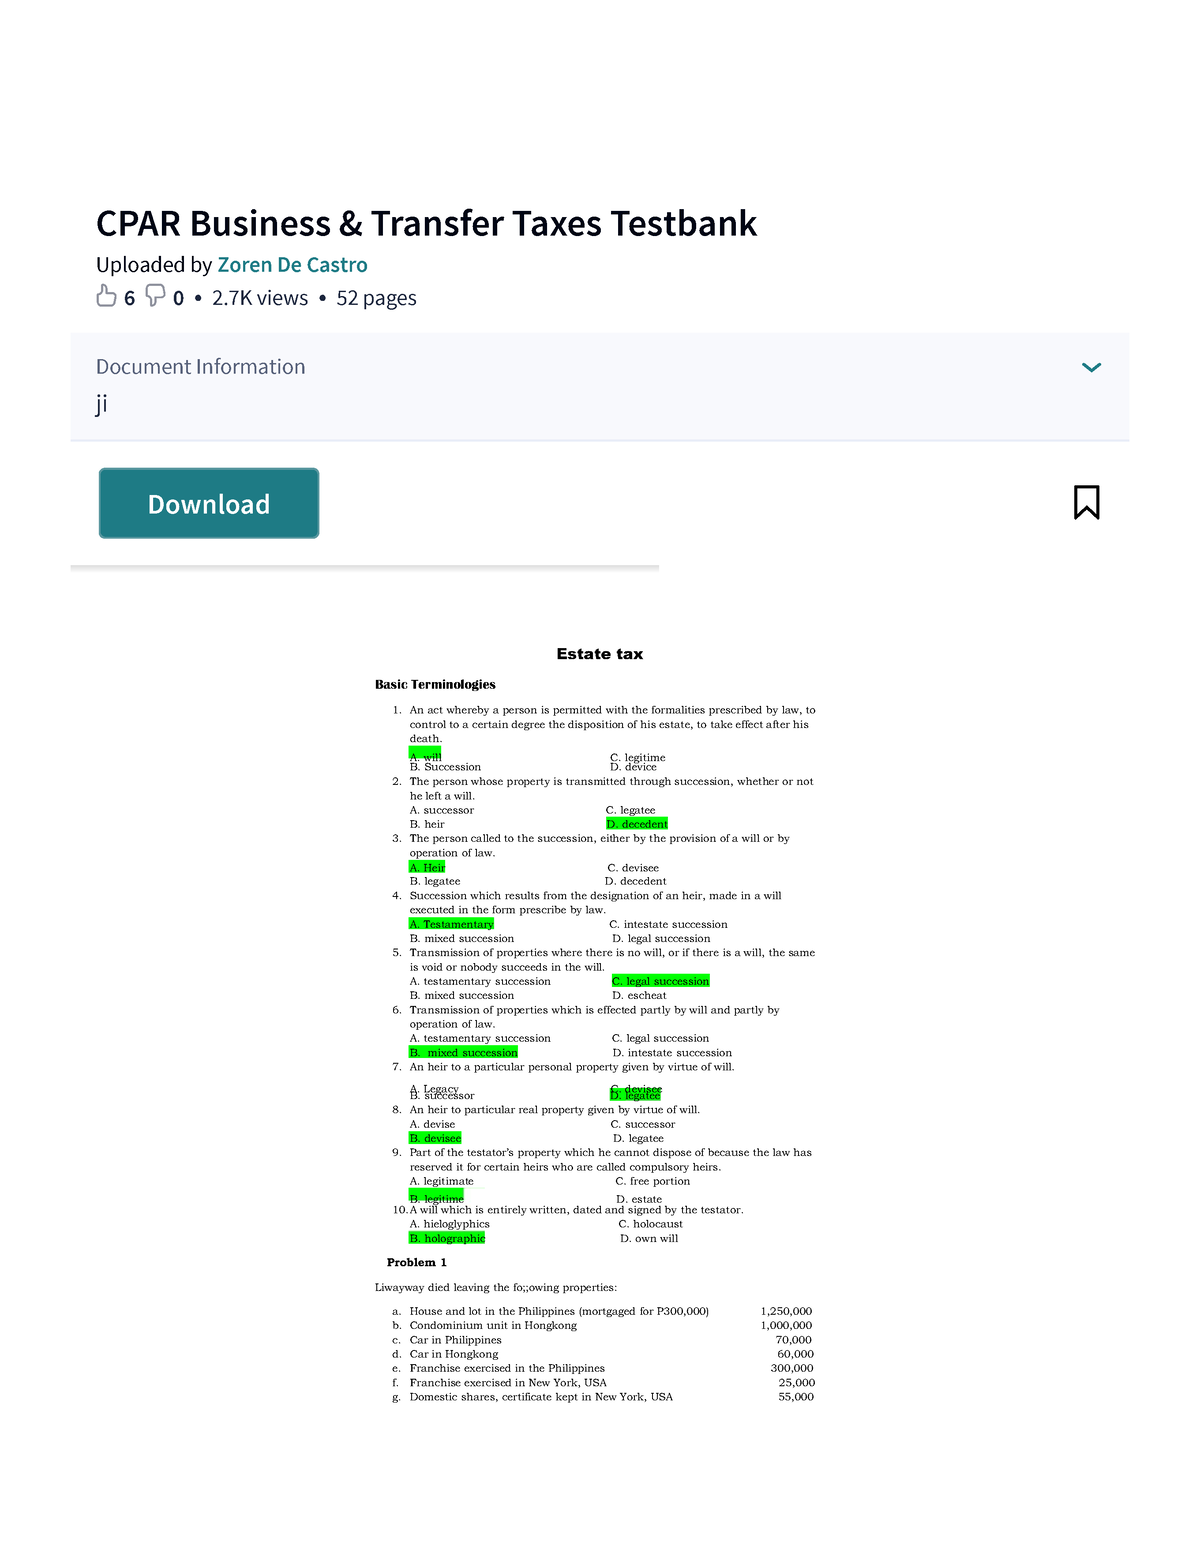 Pdfcoffee Business Tax Estate Tax Transfer Tax Cpar Business